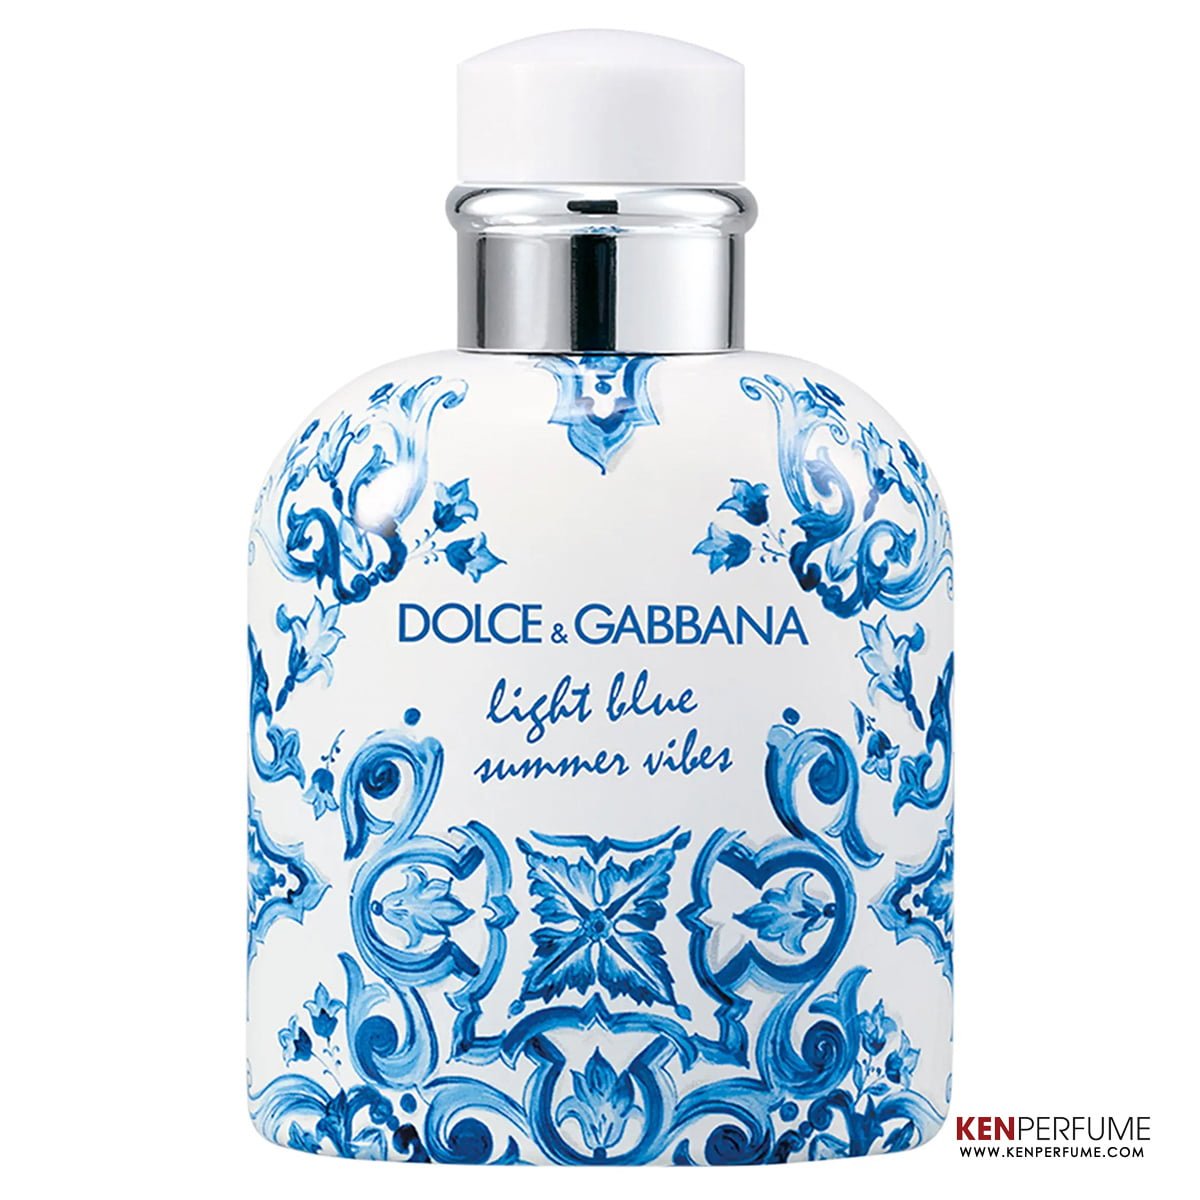 DolceGabbana   light blue